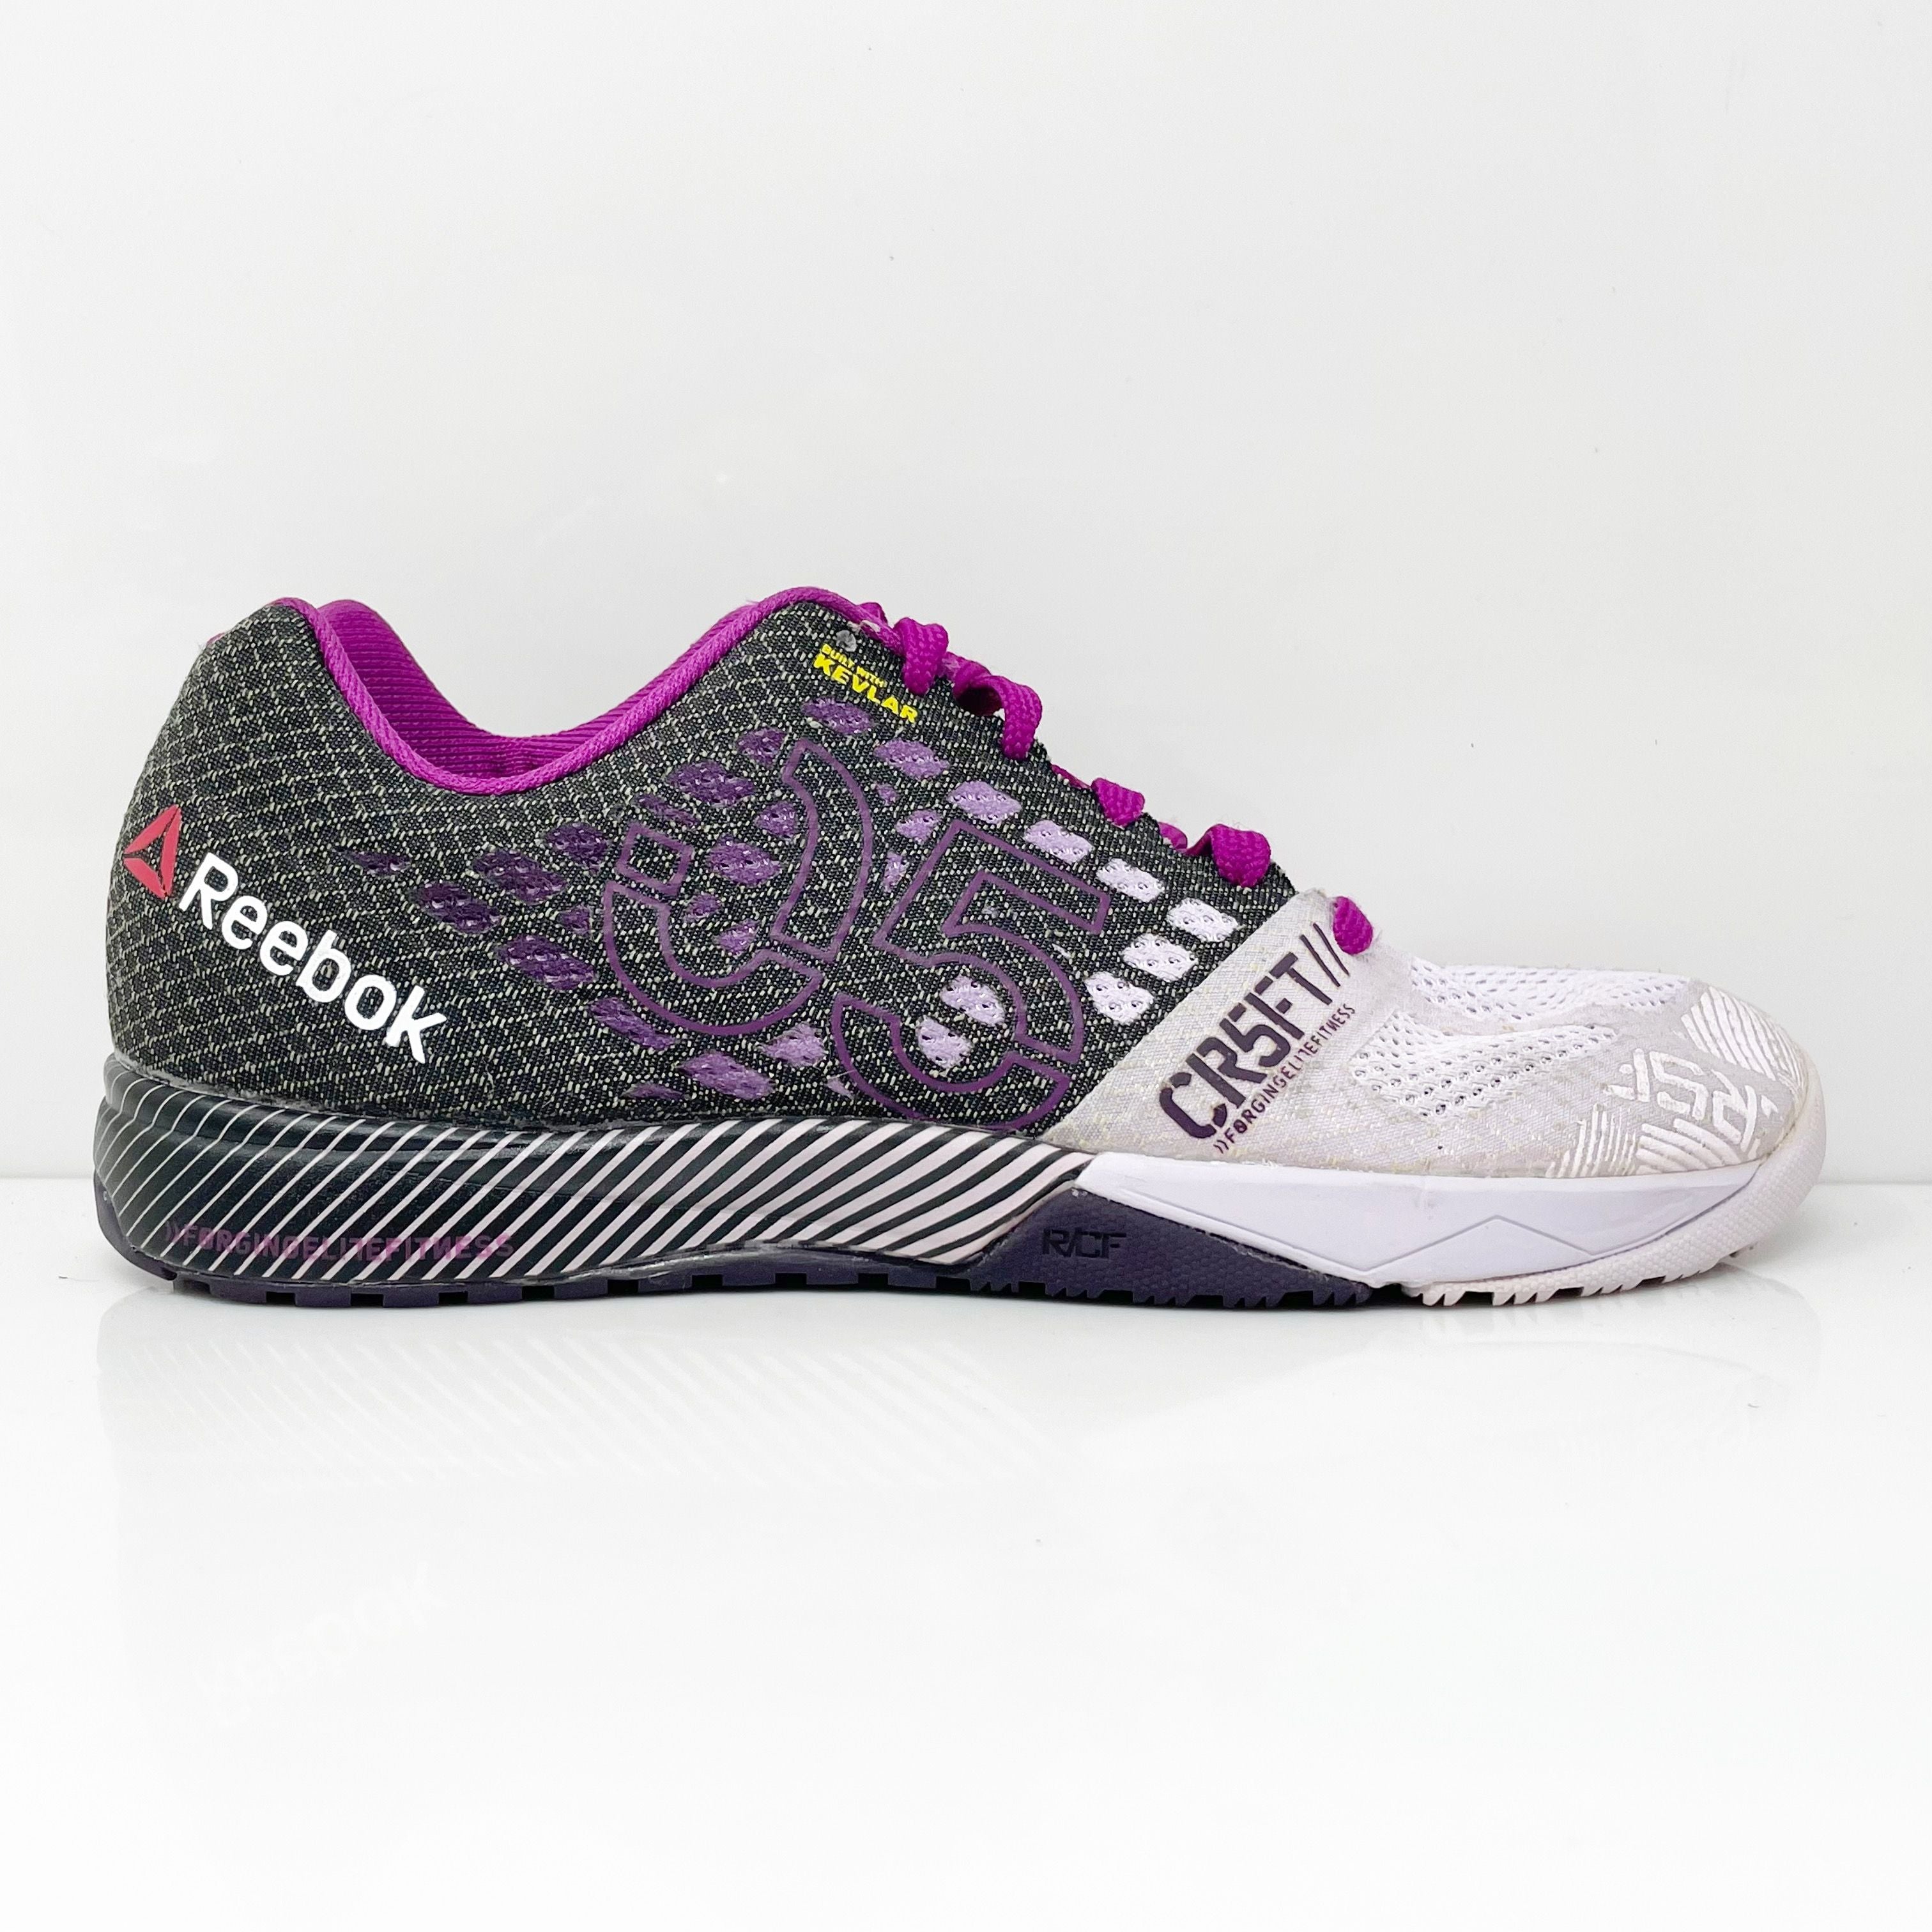 Reebok Womens Crossfit Nano 5.0 M49798 Pink Running Shoes Sneakers SneakerCycle